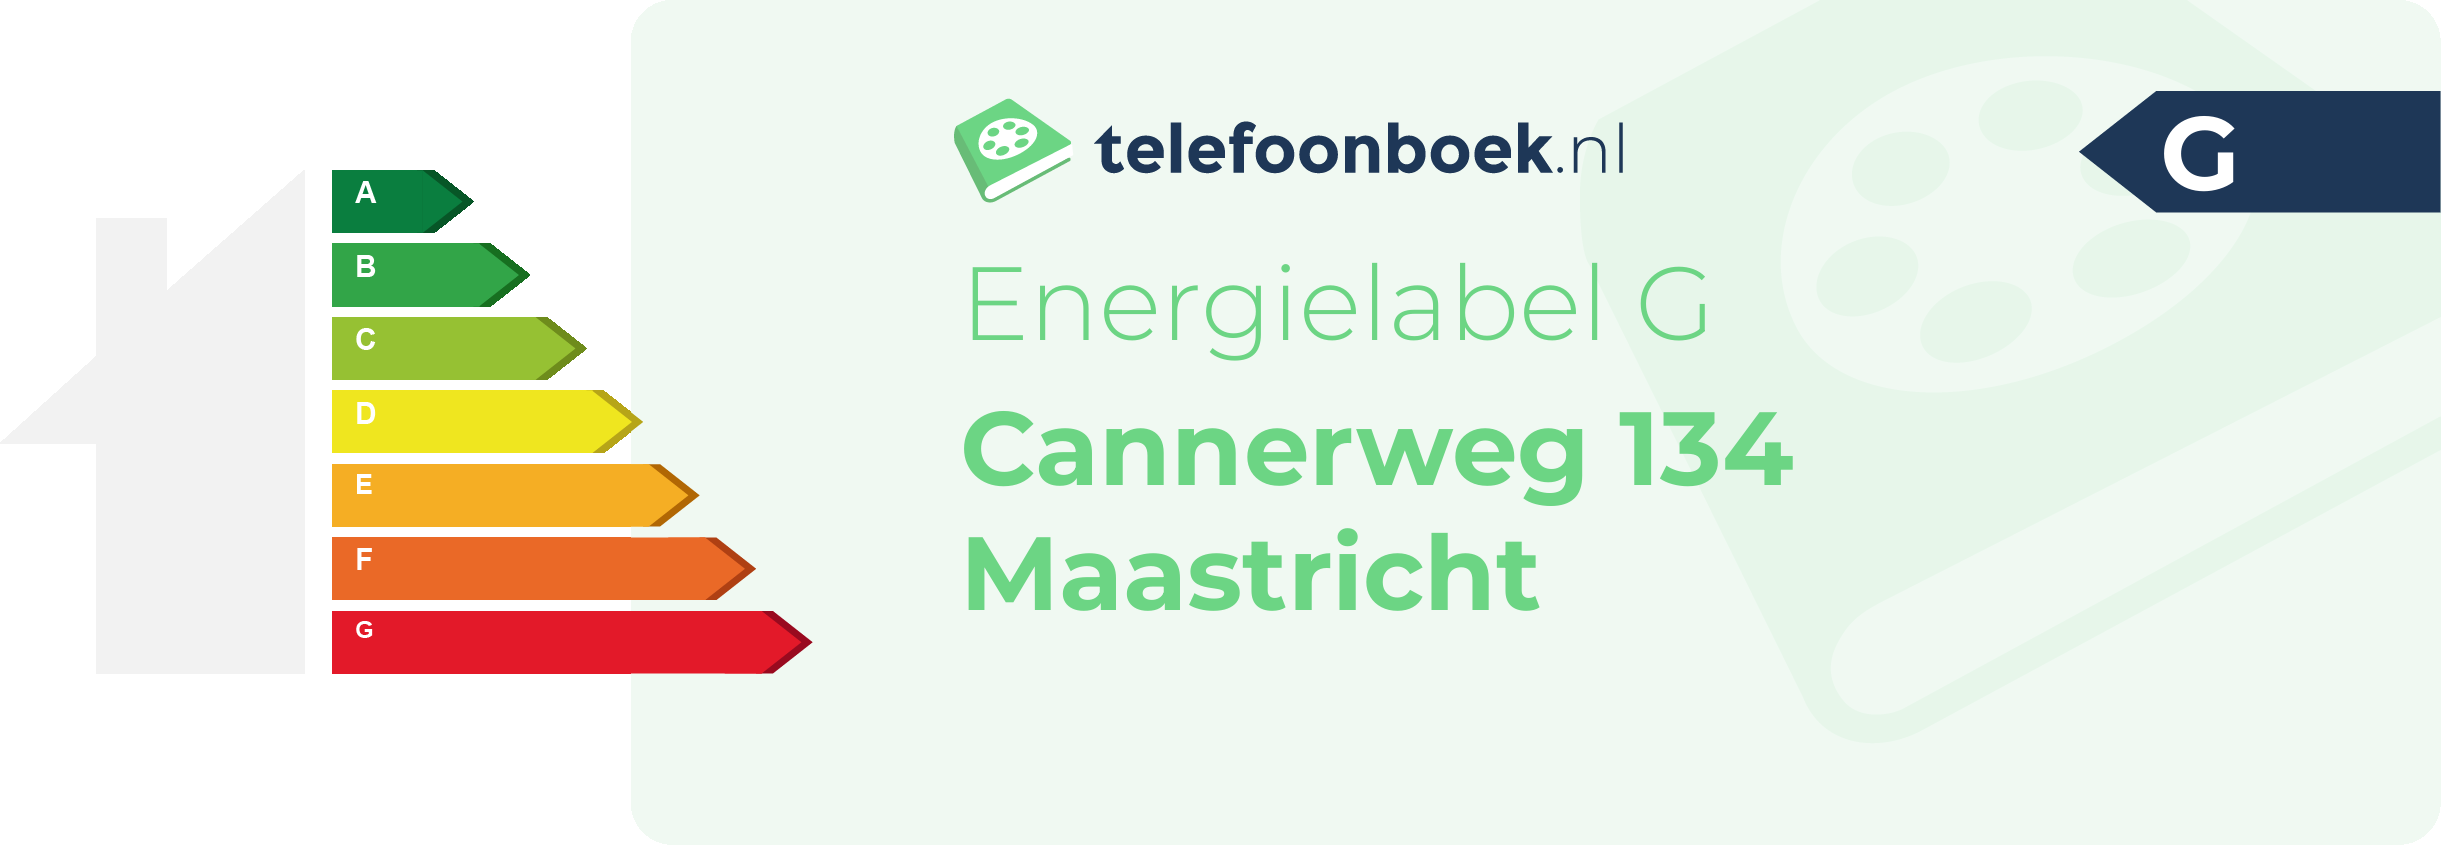 Energielabel Cannerweg 134 Maastricht